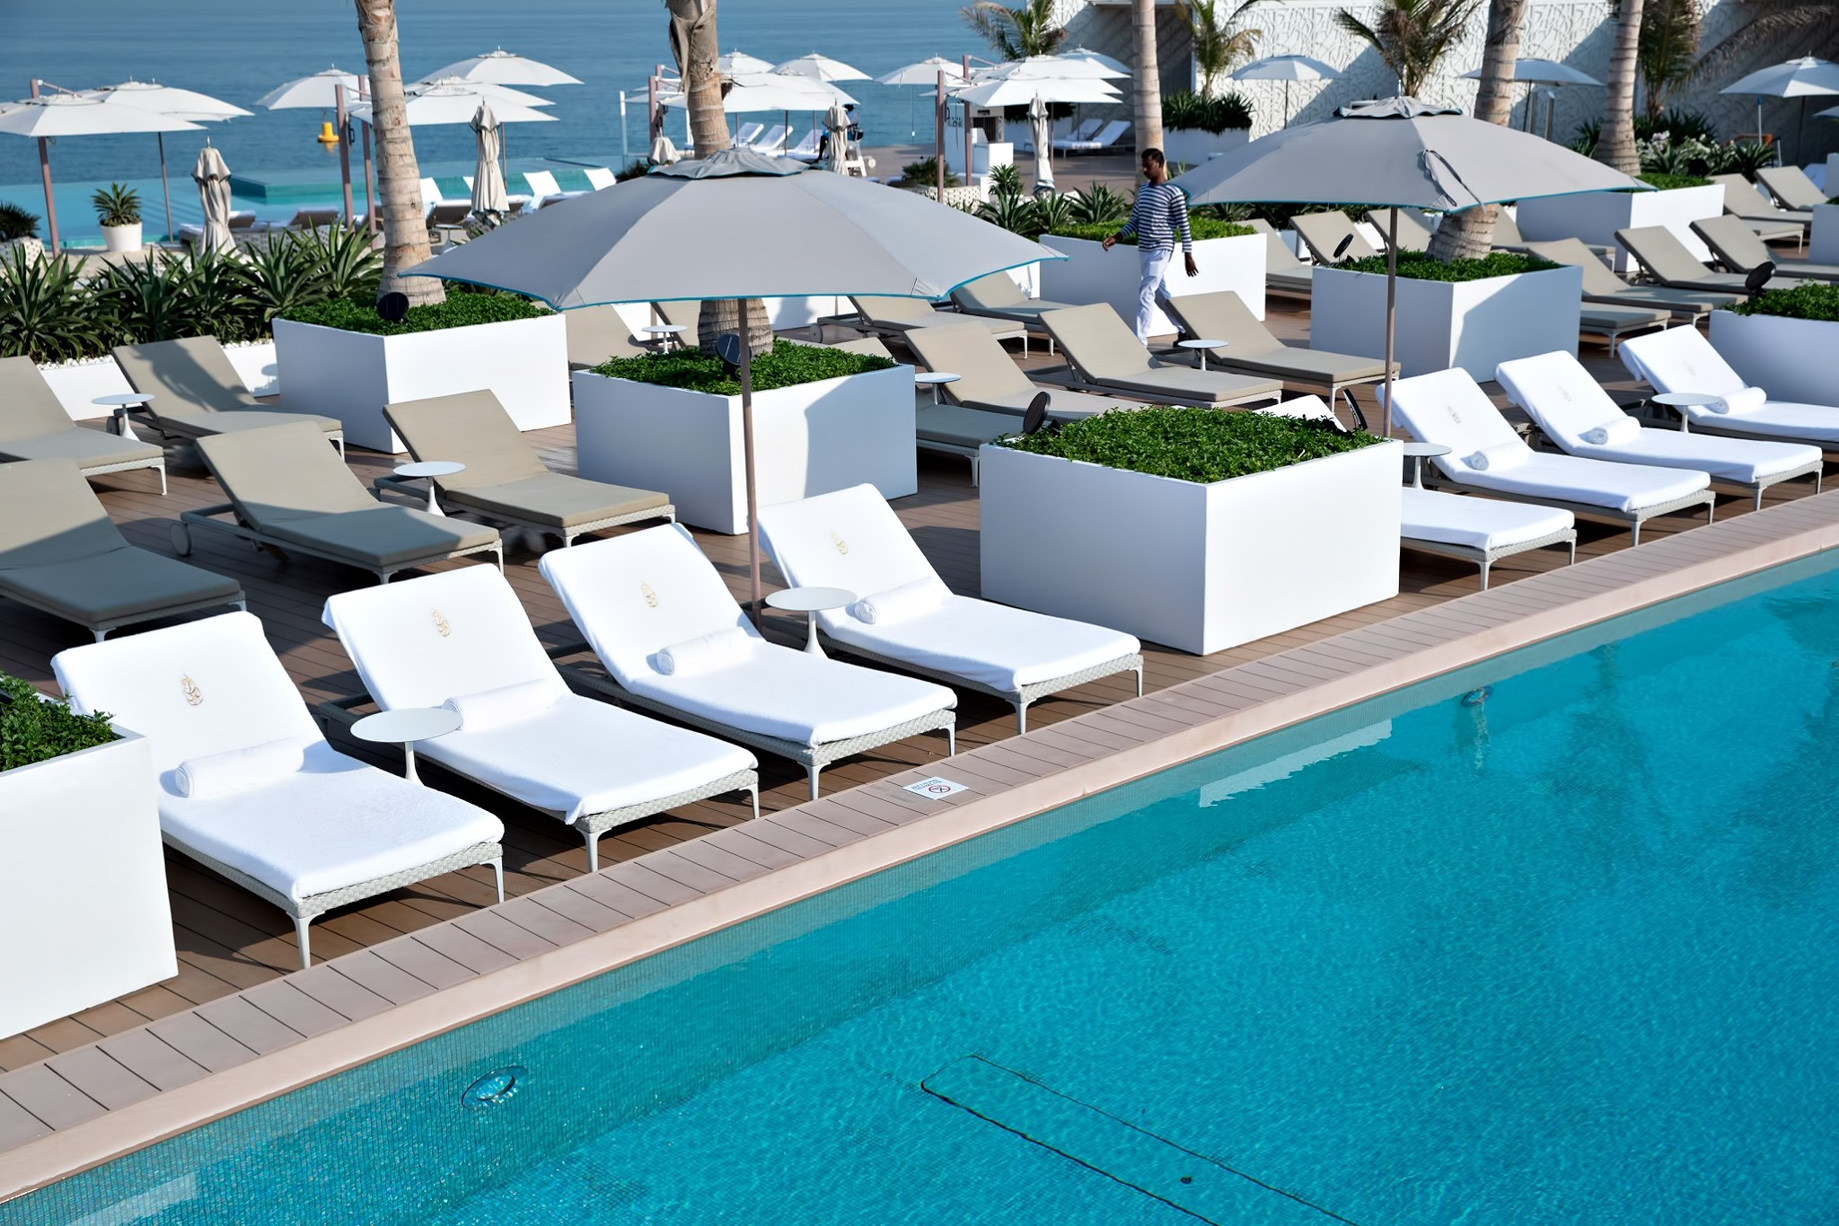 Burj Al Arab Jumeirah Hotel – Dubai, UAE – Burj Al Arab Terrace Poolside Lounge Chairs